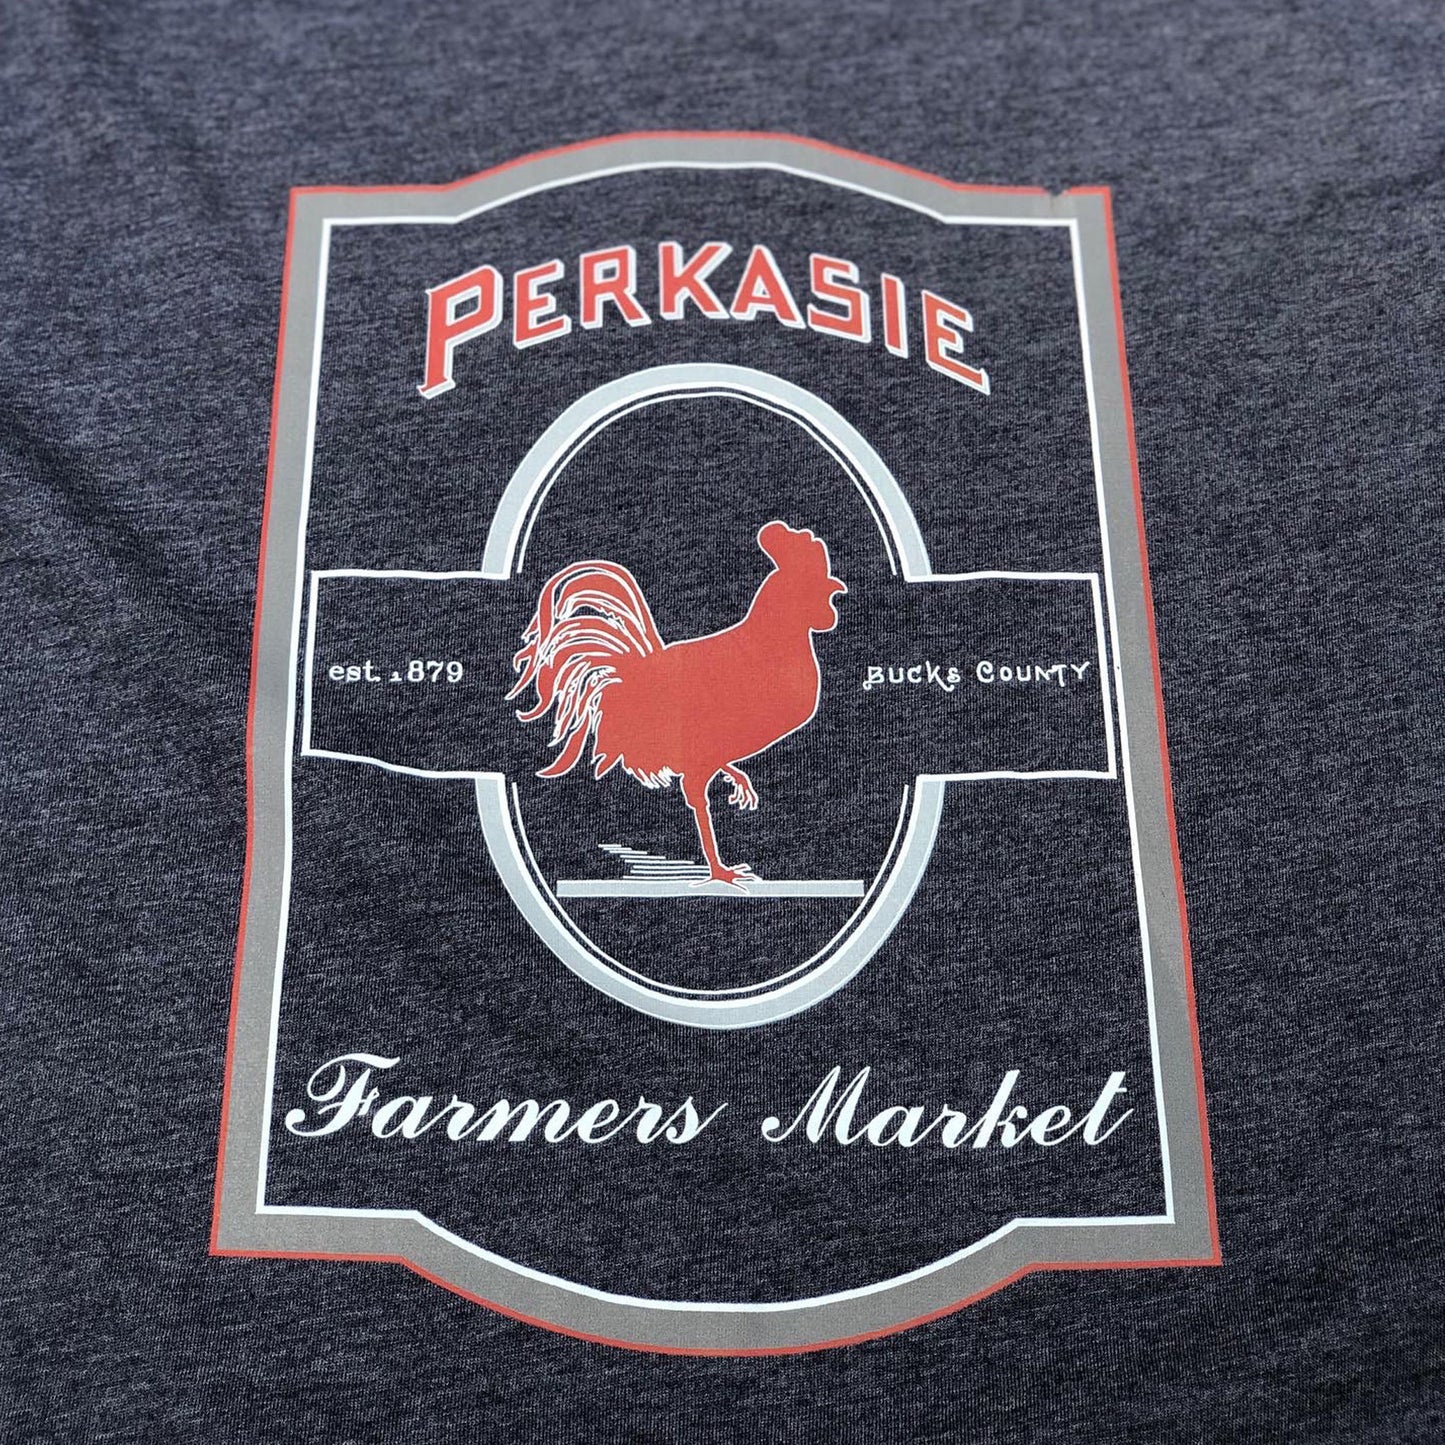 Perkasie Farmers Market graphic T-shirt